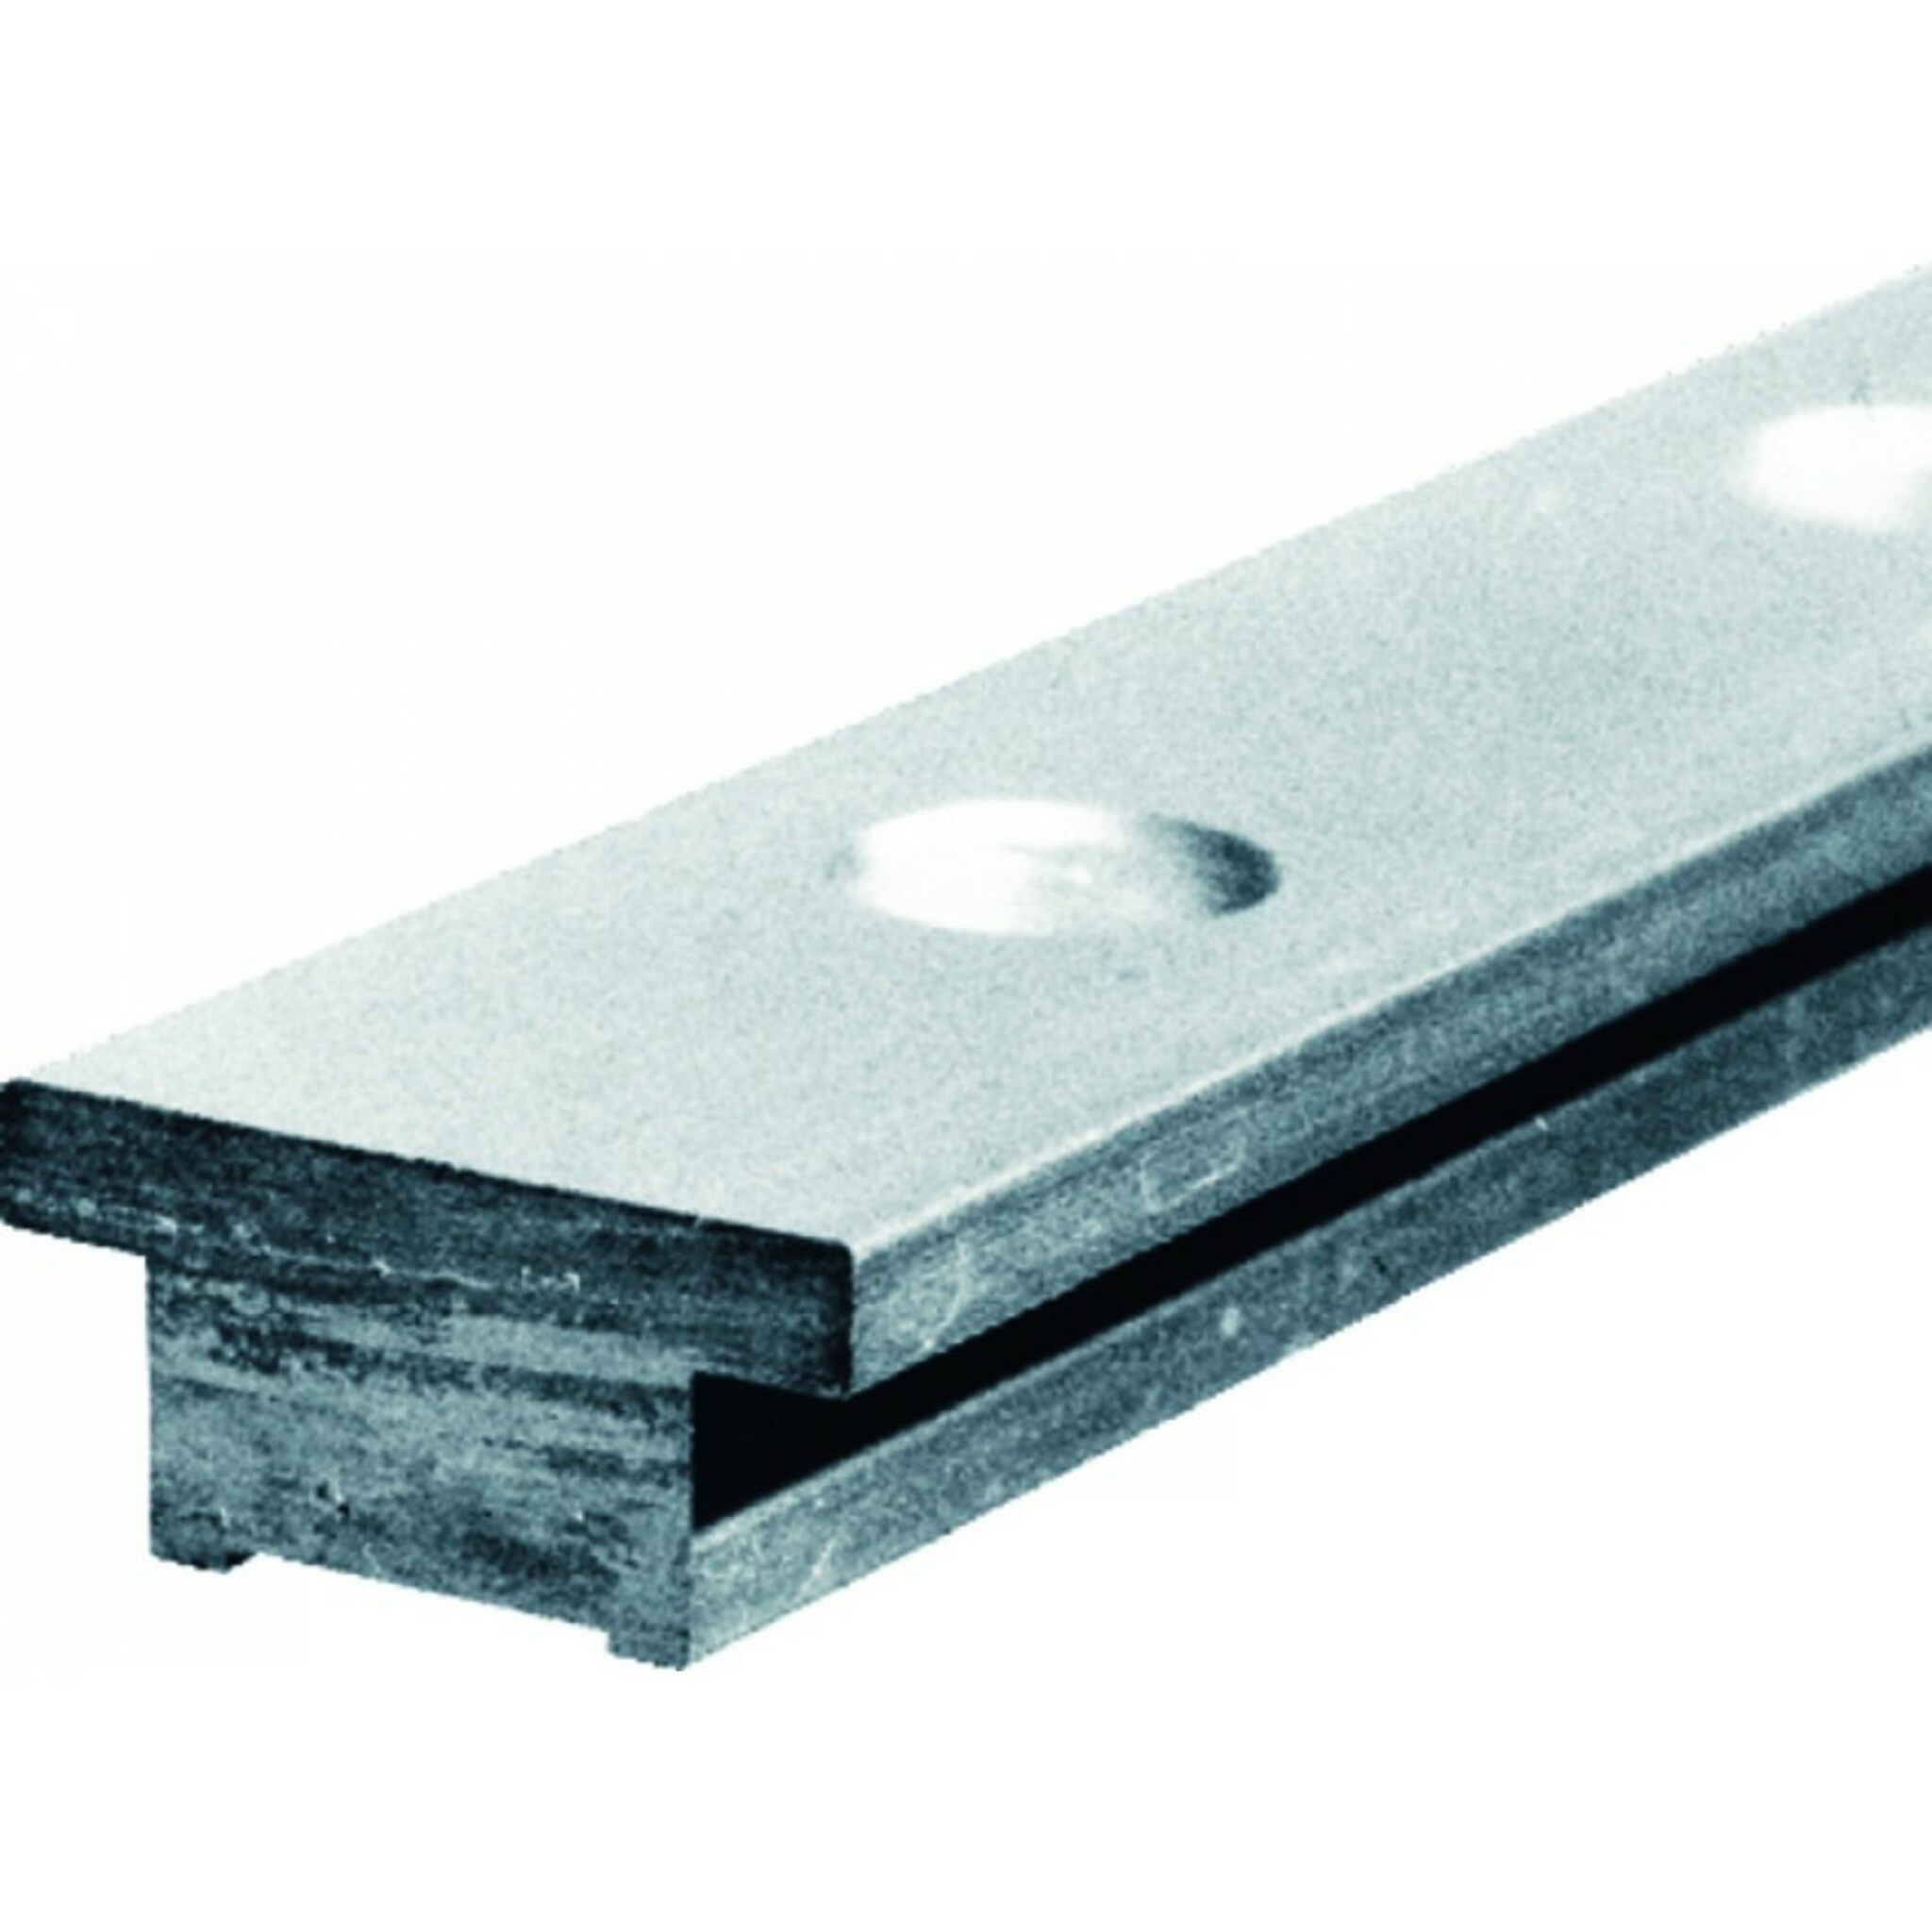 Pfeiffer genoa rail with T-profile, 32x6 mm